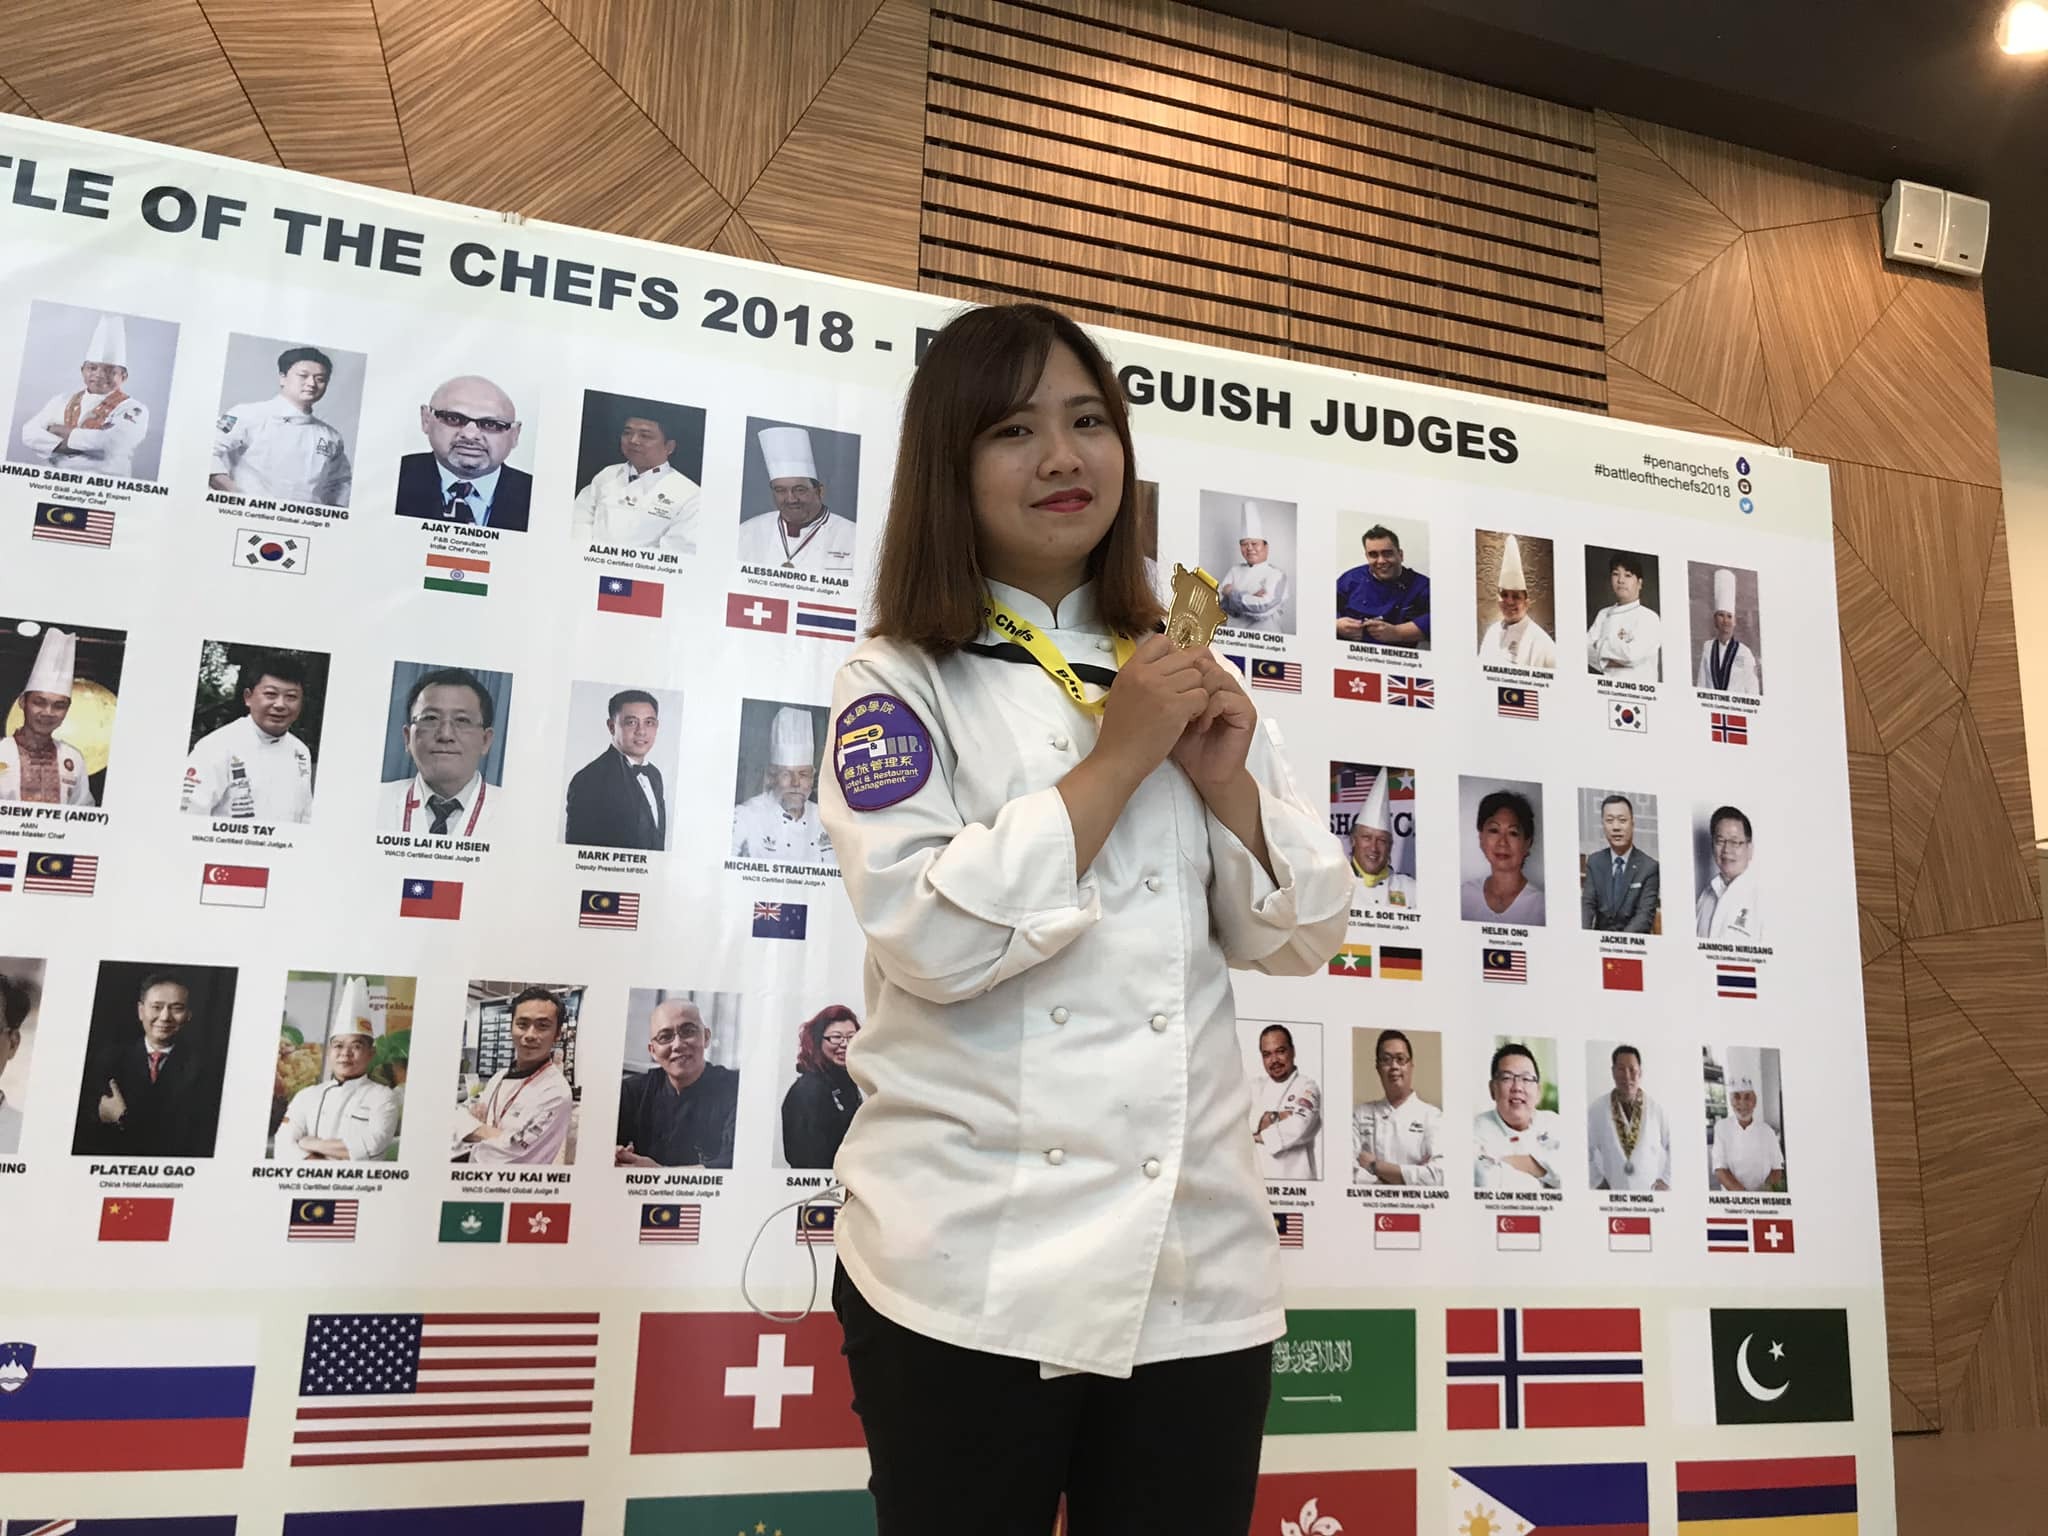 2018 馬來西亞檳城 Battle of the Chefs 競賽